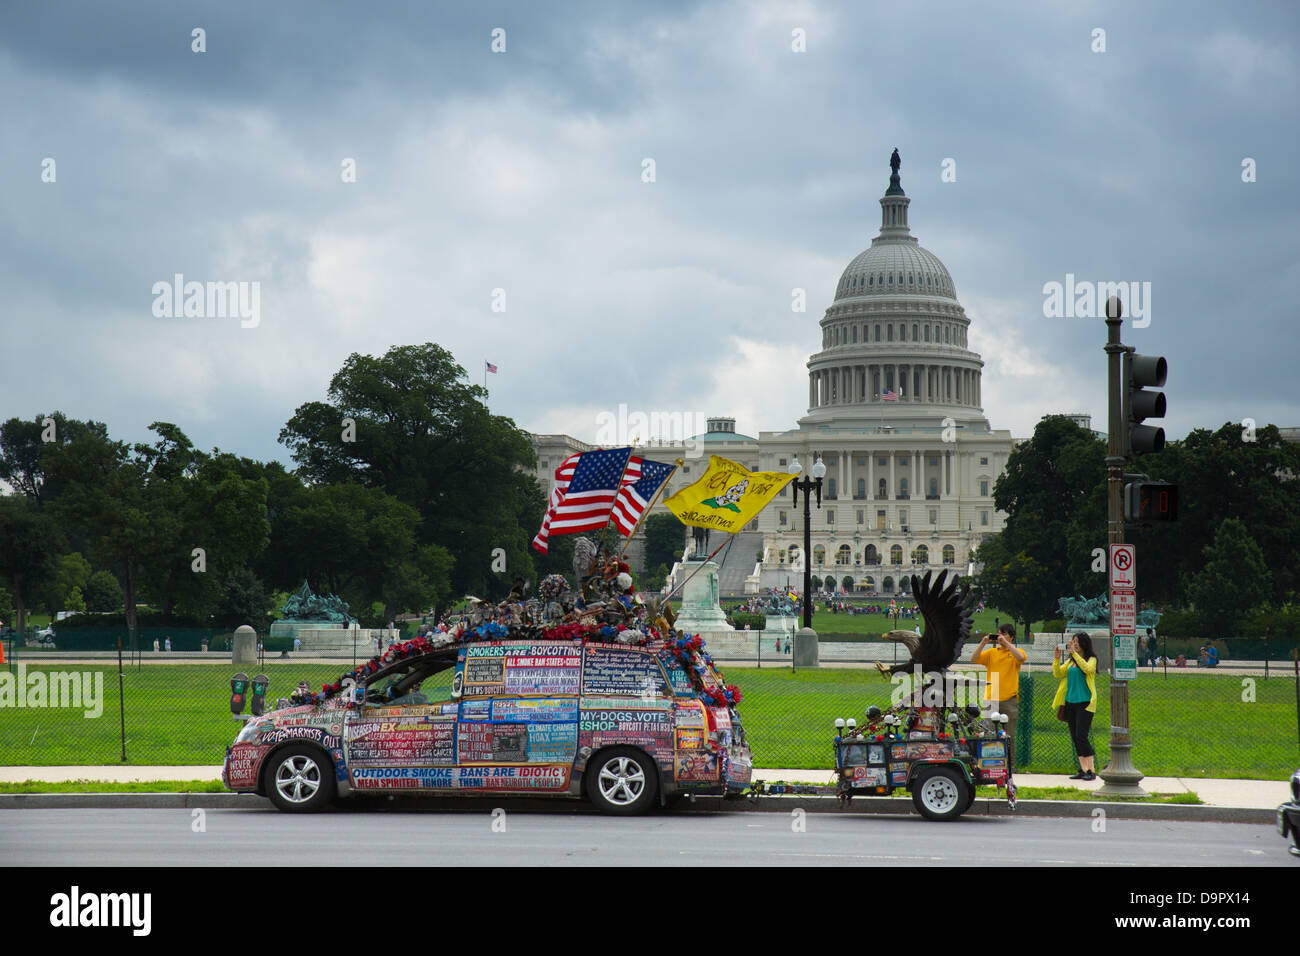 Touristen fotografieren van bedeckt in politischen Botschaften vor US Capitol building, Washington D.C., USA Stockfoto